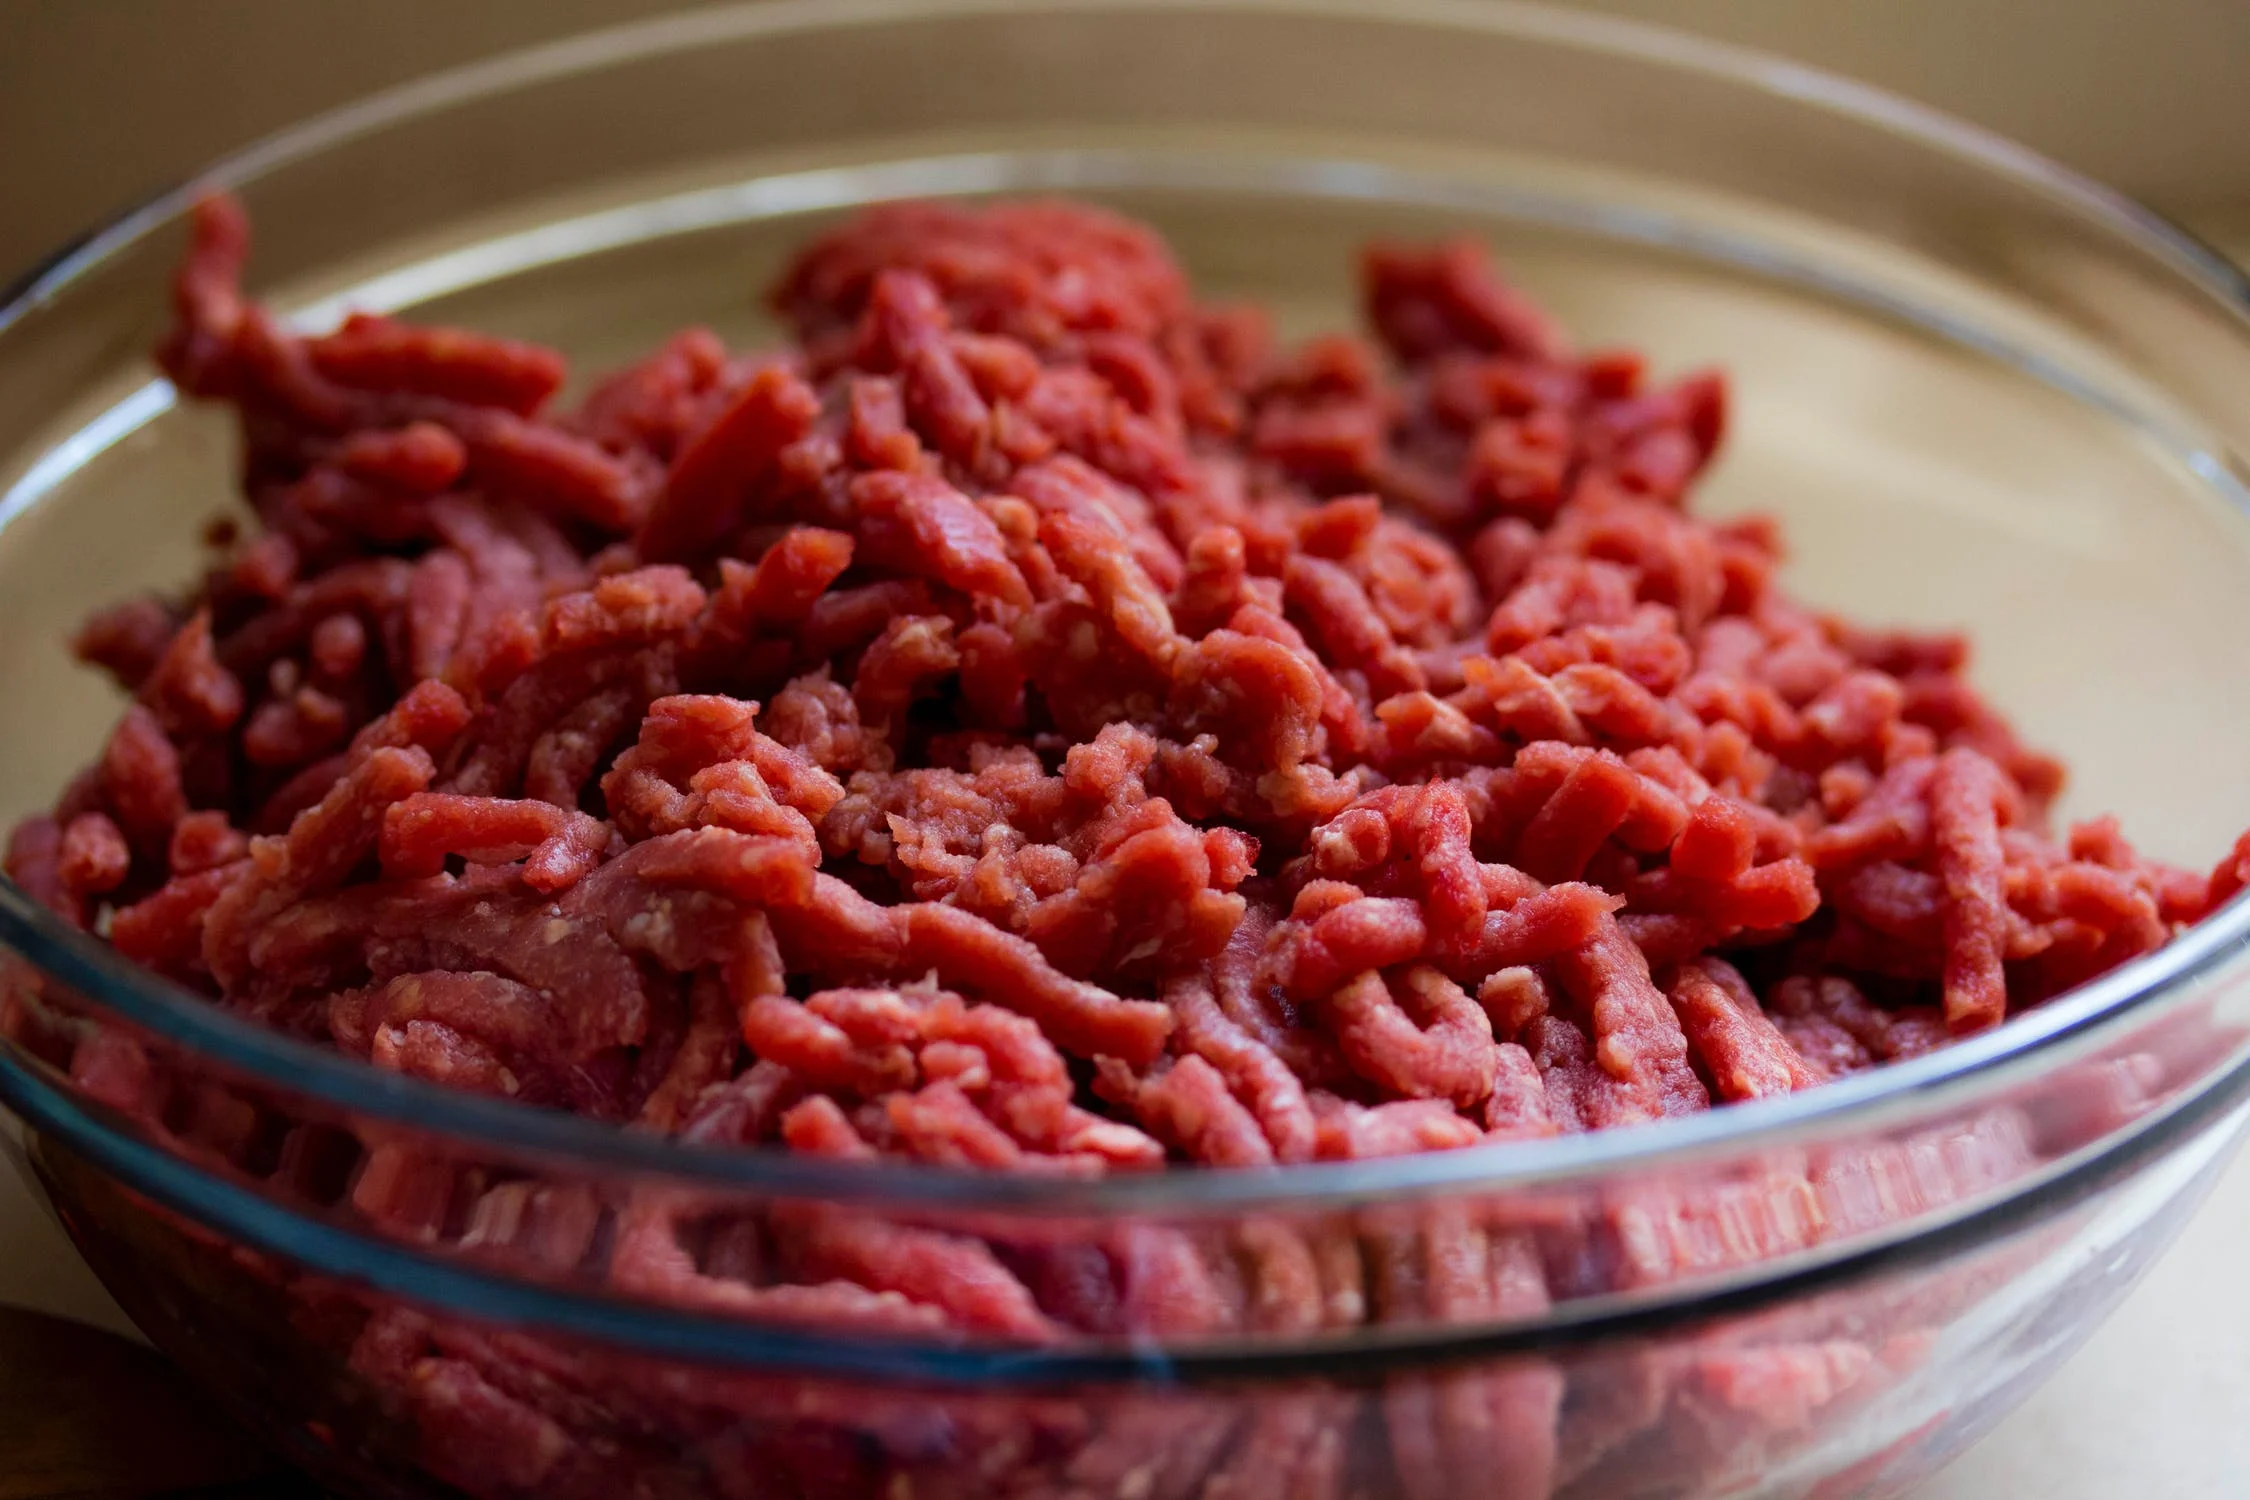 ground beef recall, food recall, salmonella, e. coli